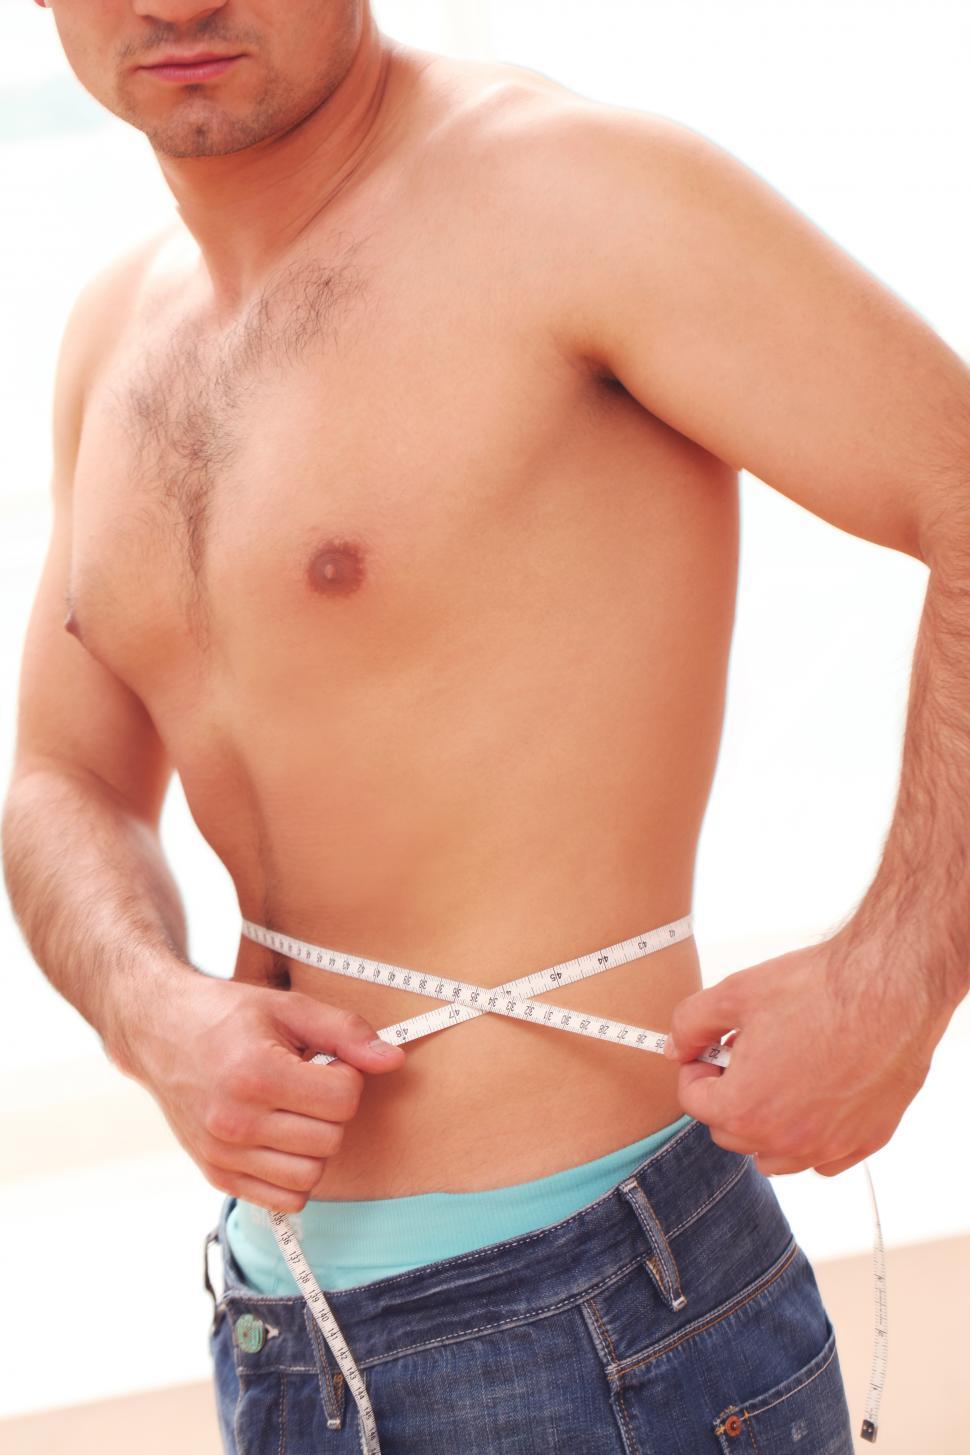 Free Image of Guy measuring his waist 